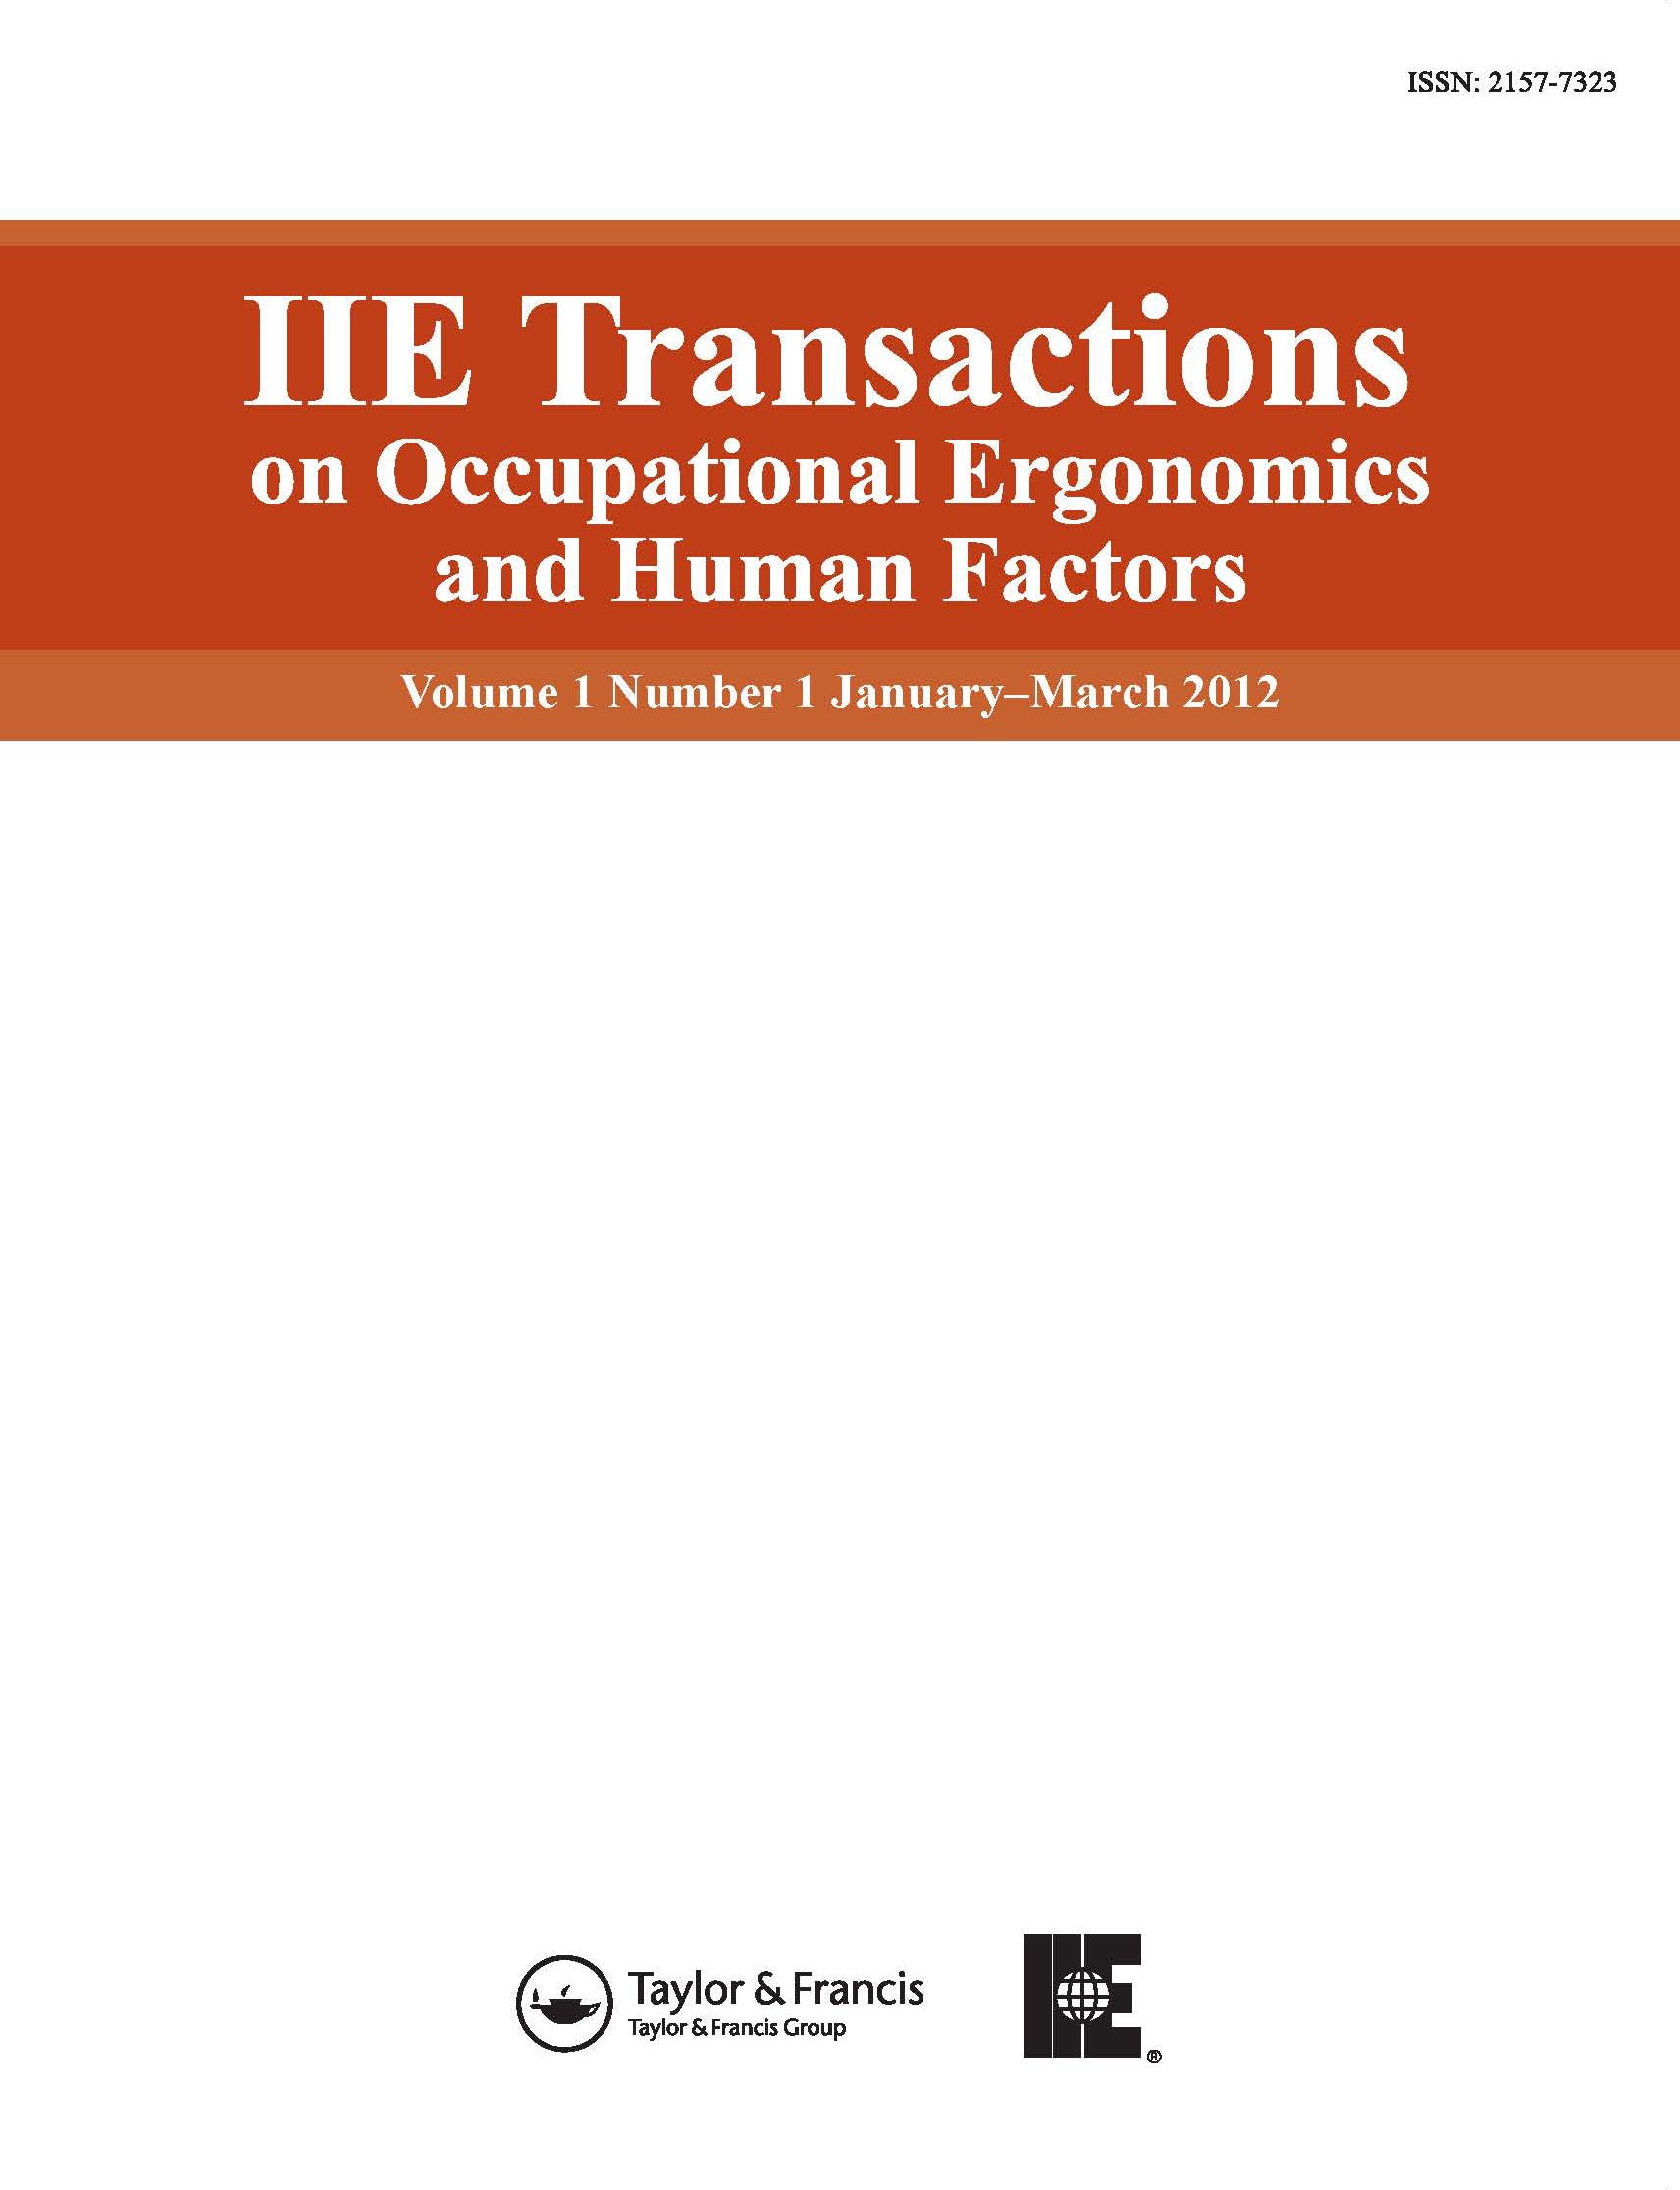 IISE Transactions on occupational ergonomics and human factors logo